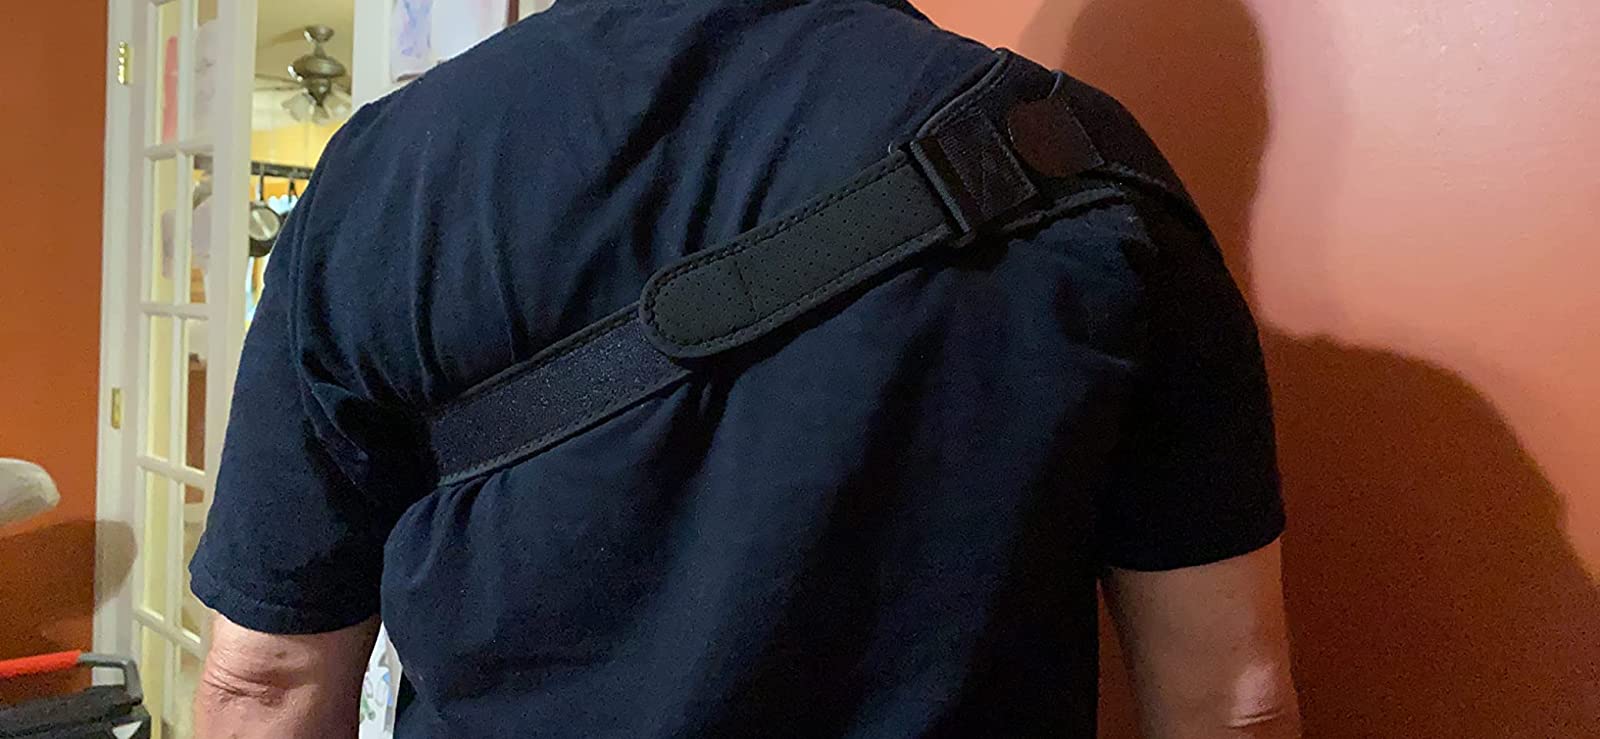 Shoulder brace compression sleeve support strap photo review